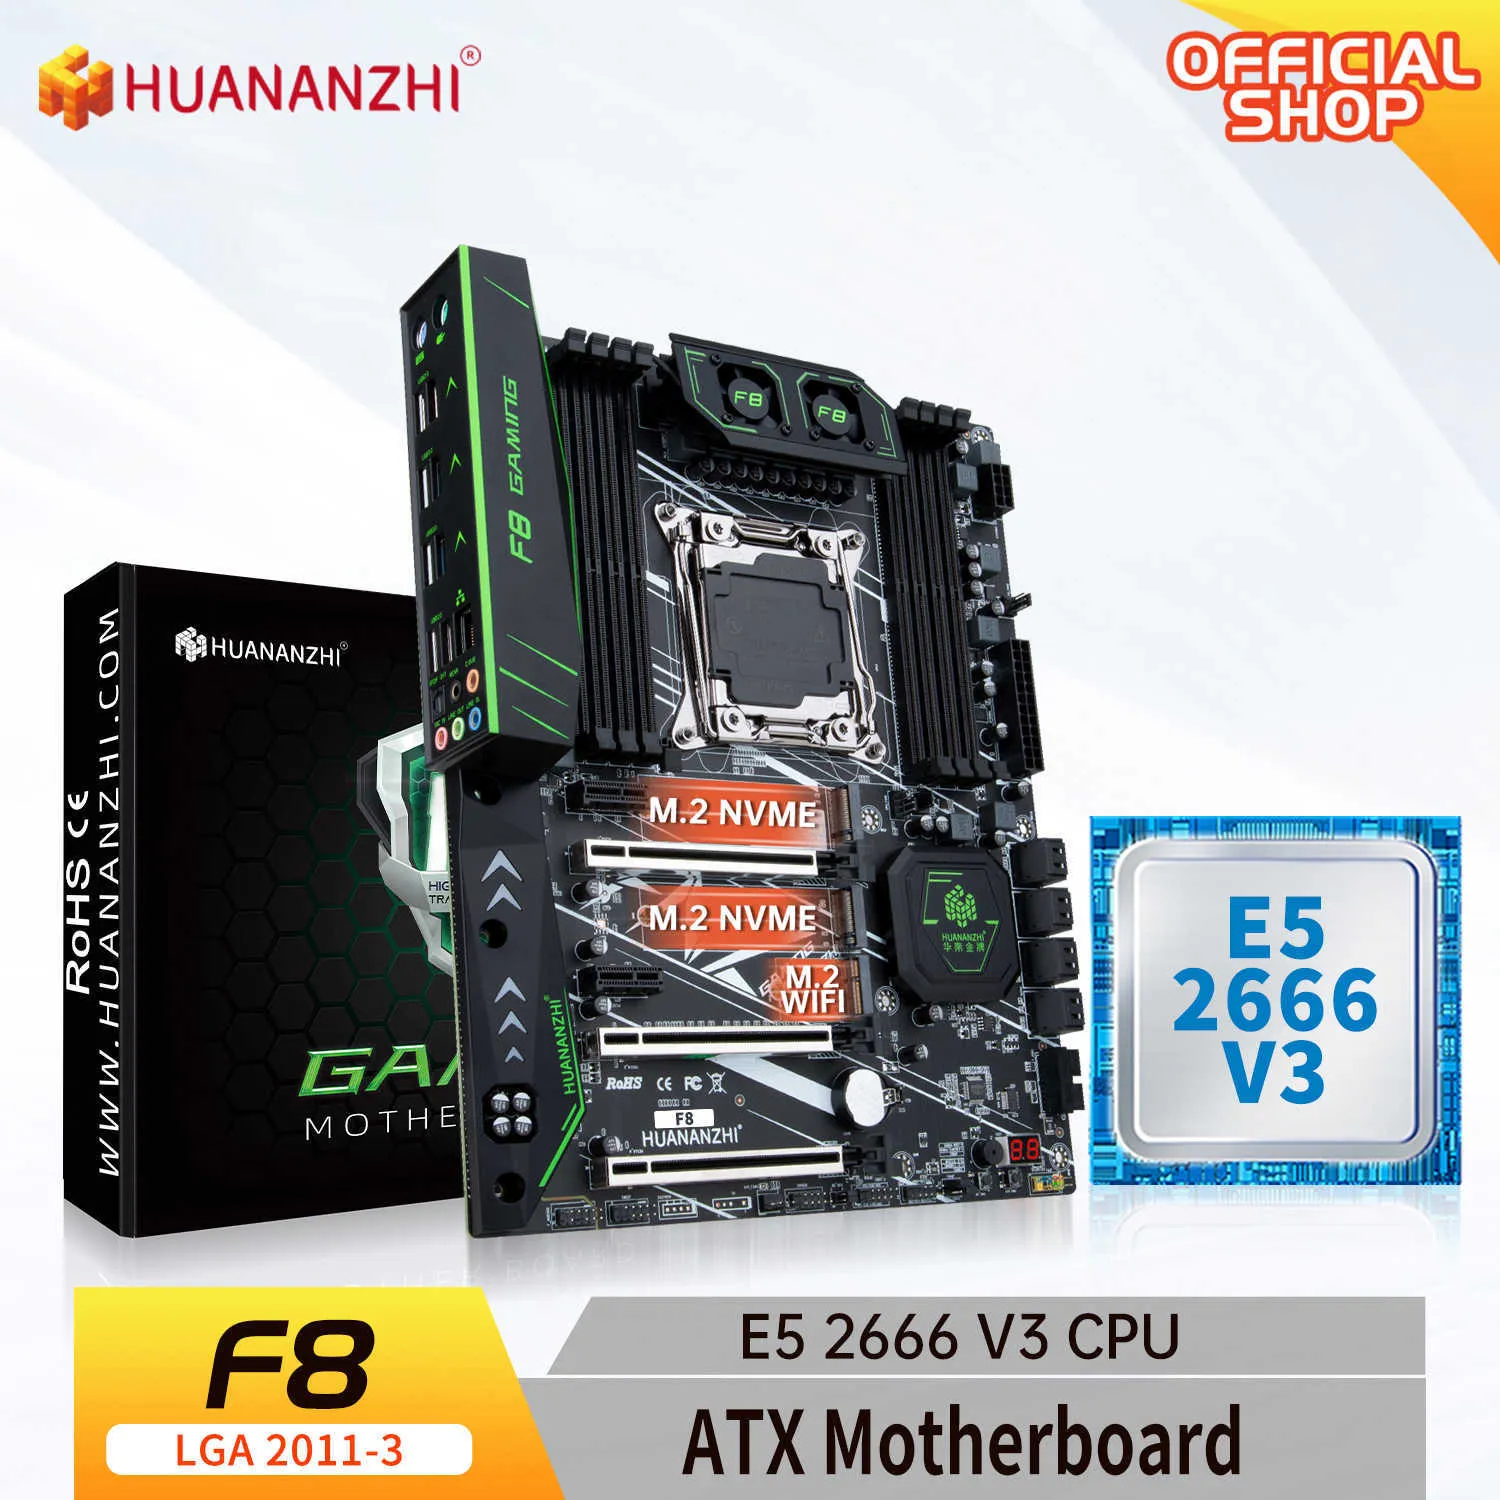 HUANANZHI F8 LGA 2011-3 carte mère avec Intel XEON E5 2666 V3 LGA 2011-3 DDR4 RECC NON-ECC kit de mémoire combo ensemble NVME